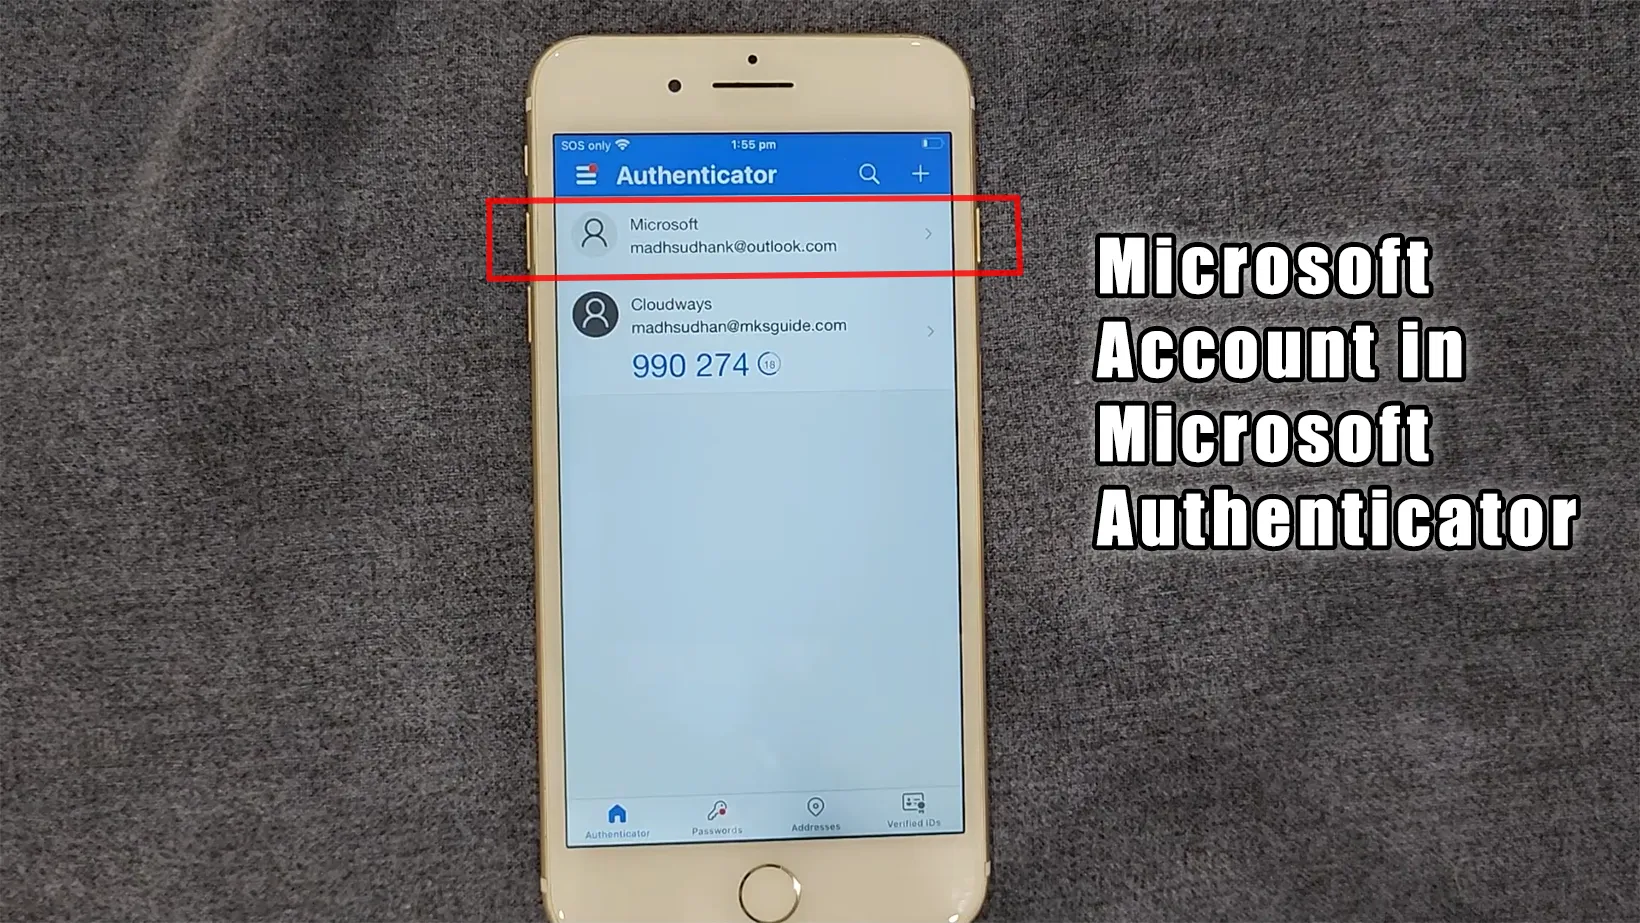 Microsoft Account in Microsoft  Authenticator